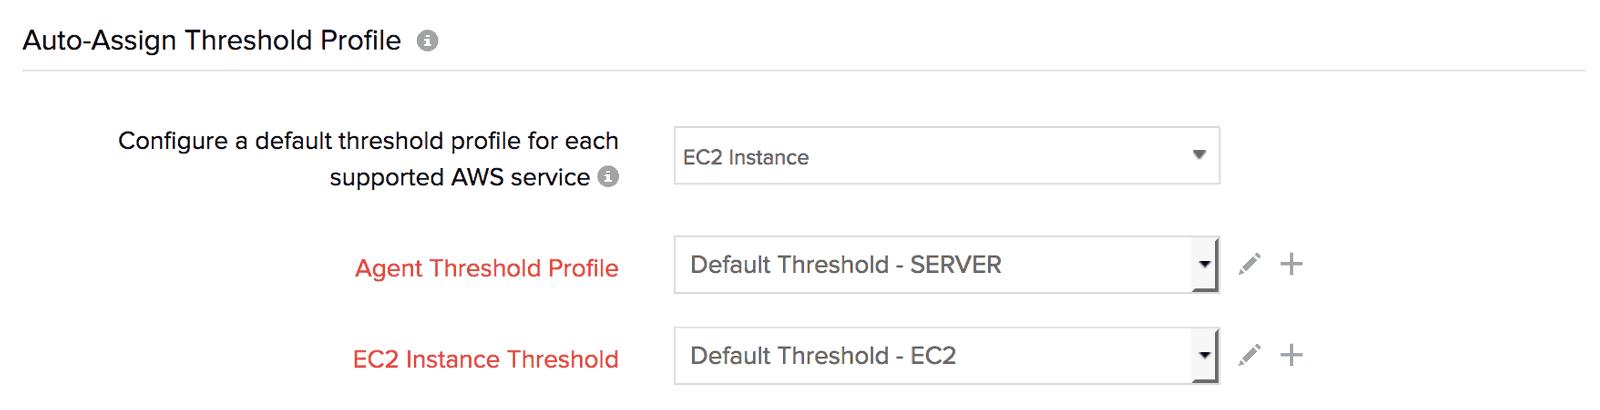 Configure a new default threshold profile